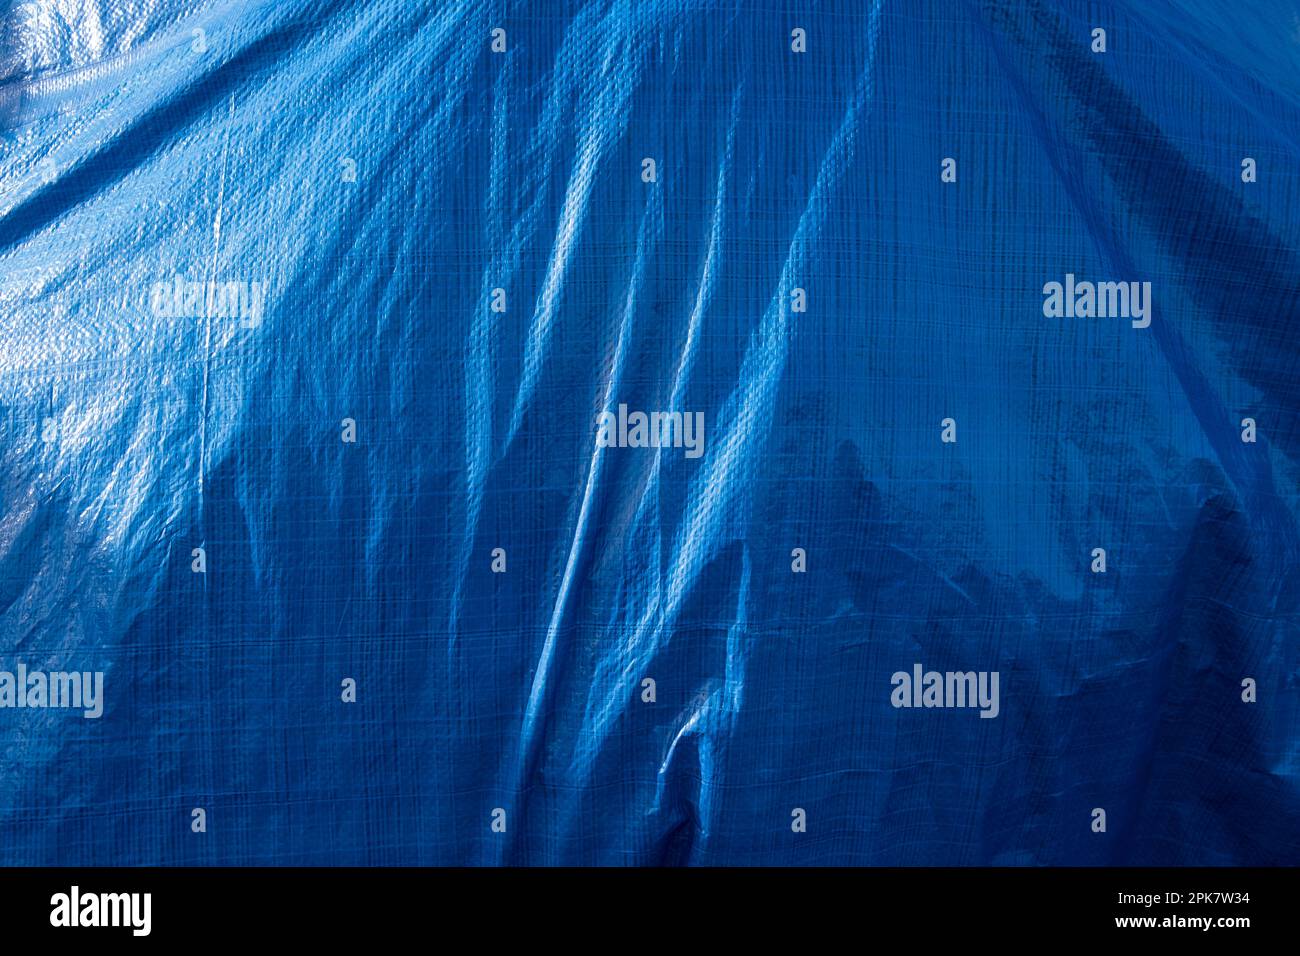 A blue tarpaulin covering a hidden object. Stock Photo